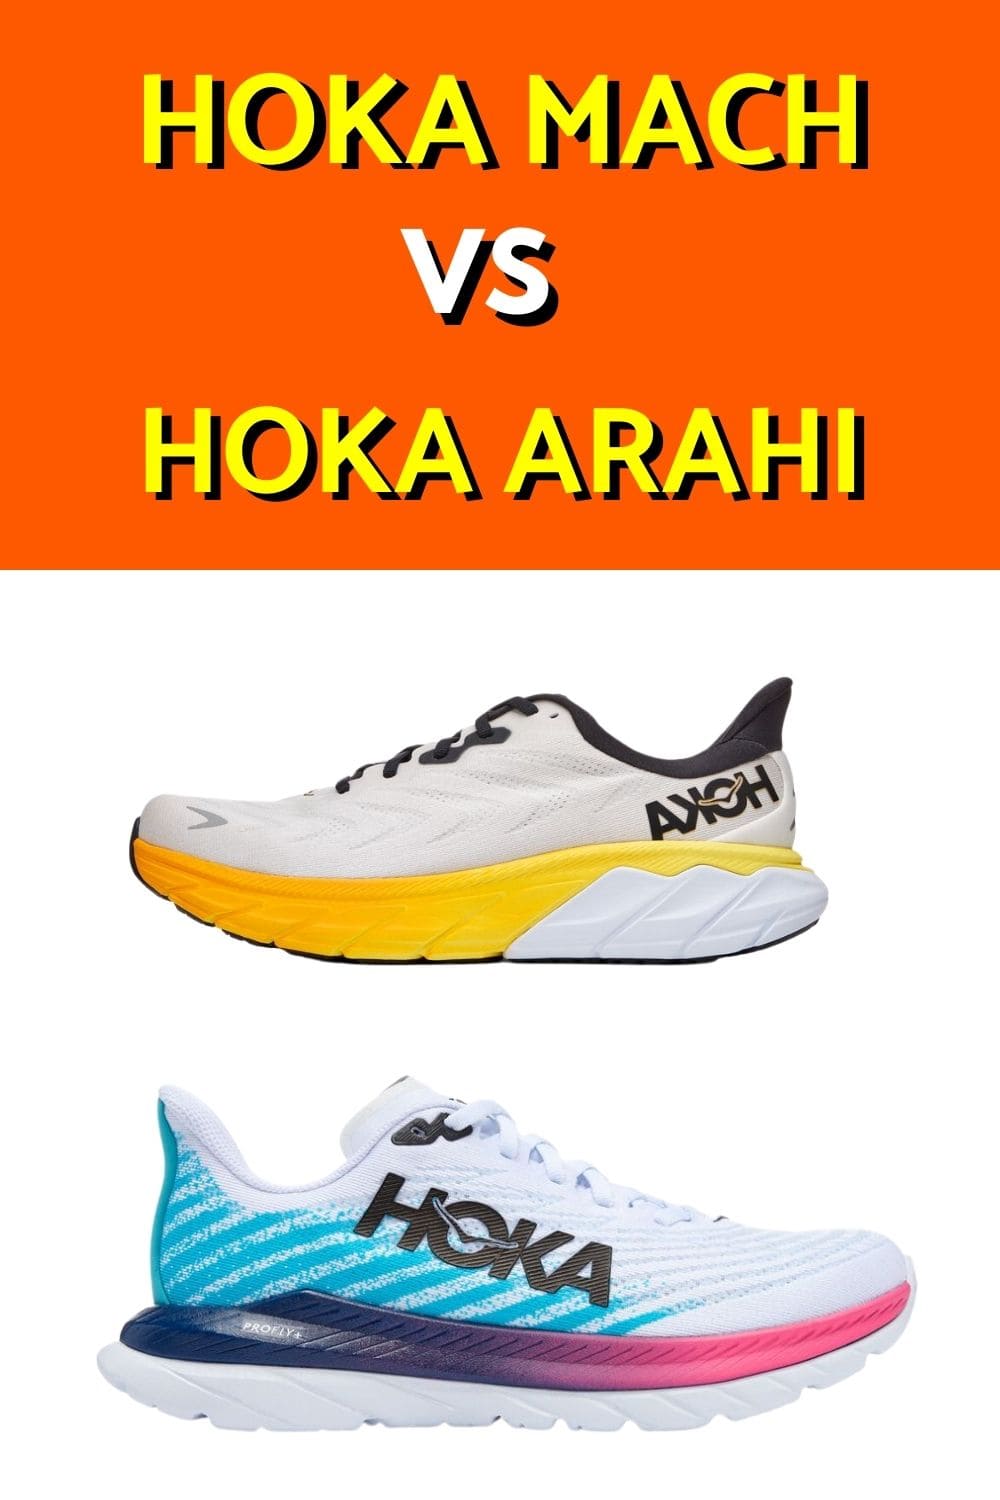 Hoka Mach Vs Arahi: Which Hoka Should You Choose? [2022] | Best Play Gear